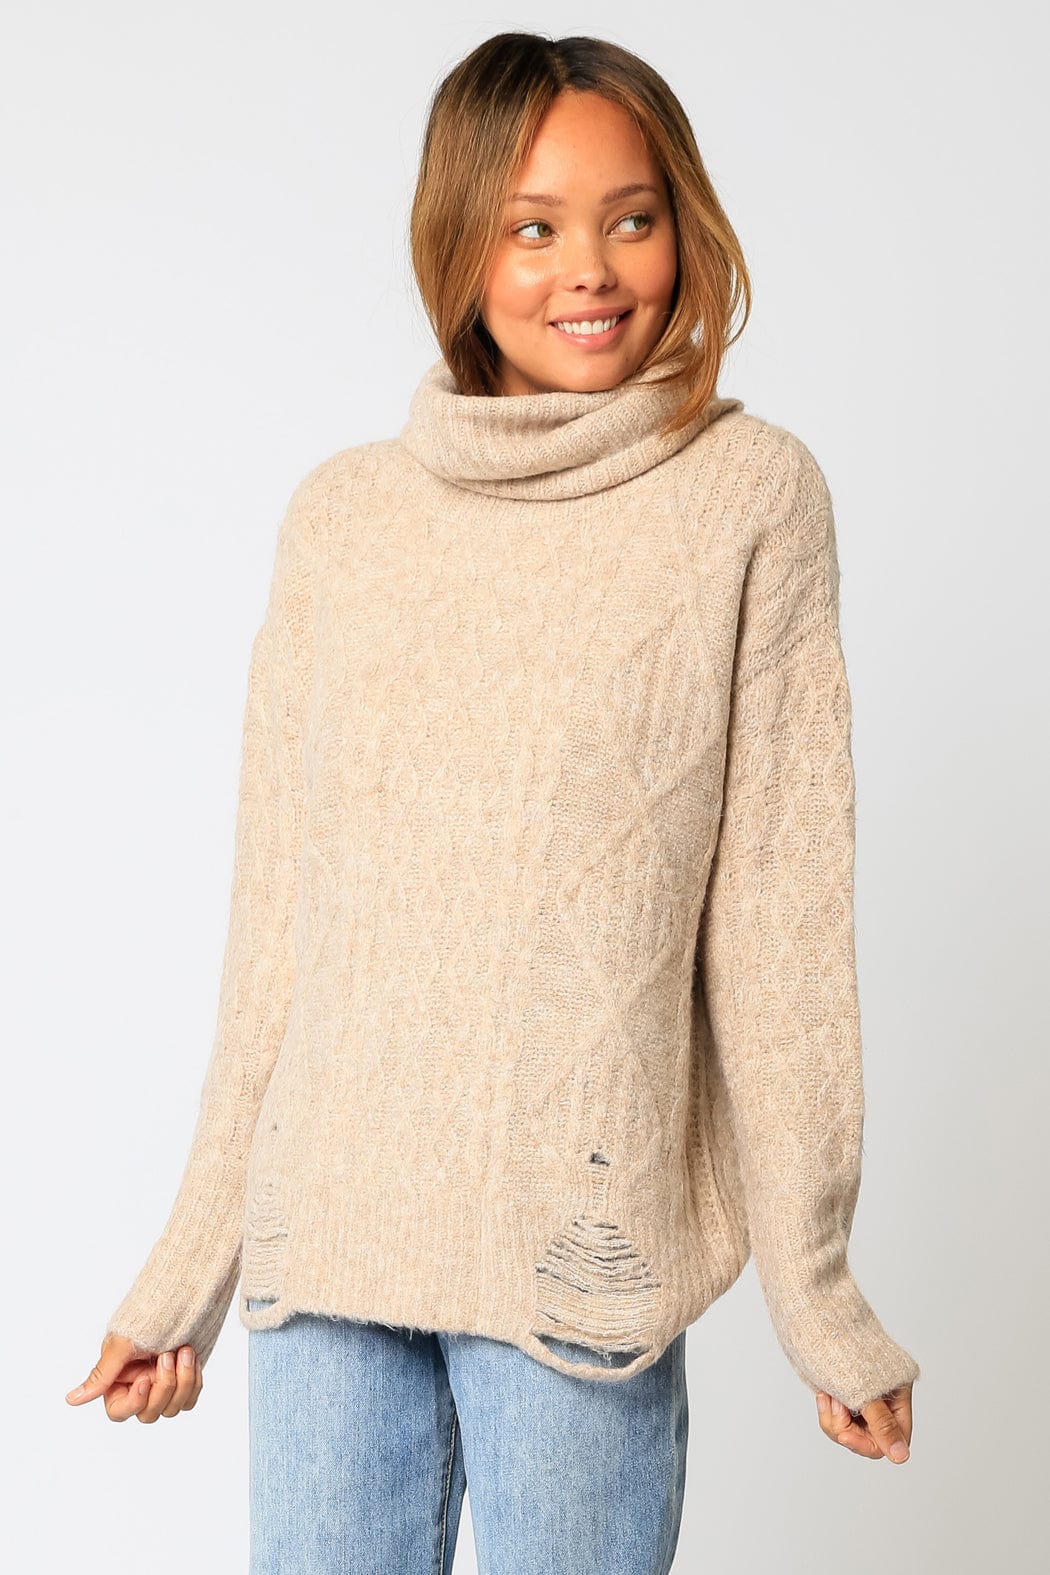 Soren Cable Knit Turtleneck Sweater Mocha, Sweater by ReFine | LIT Boutique